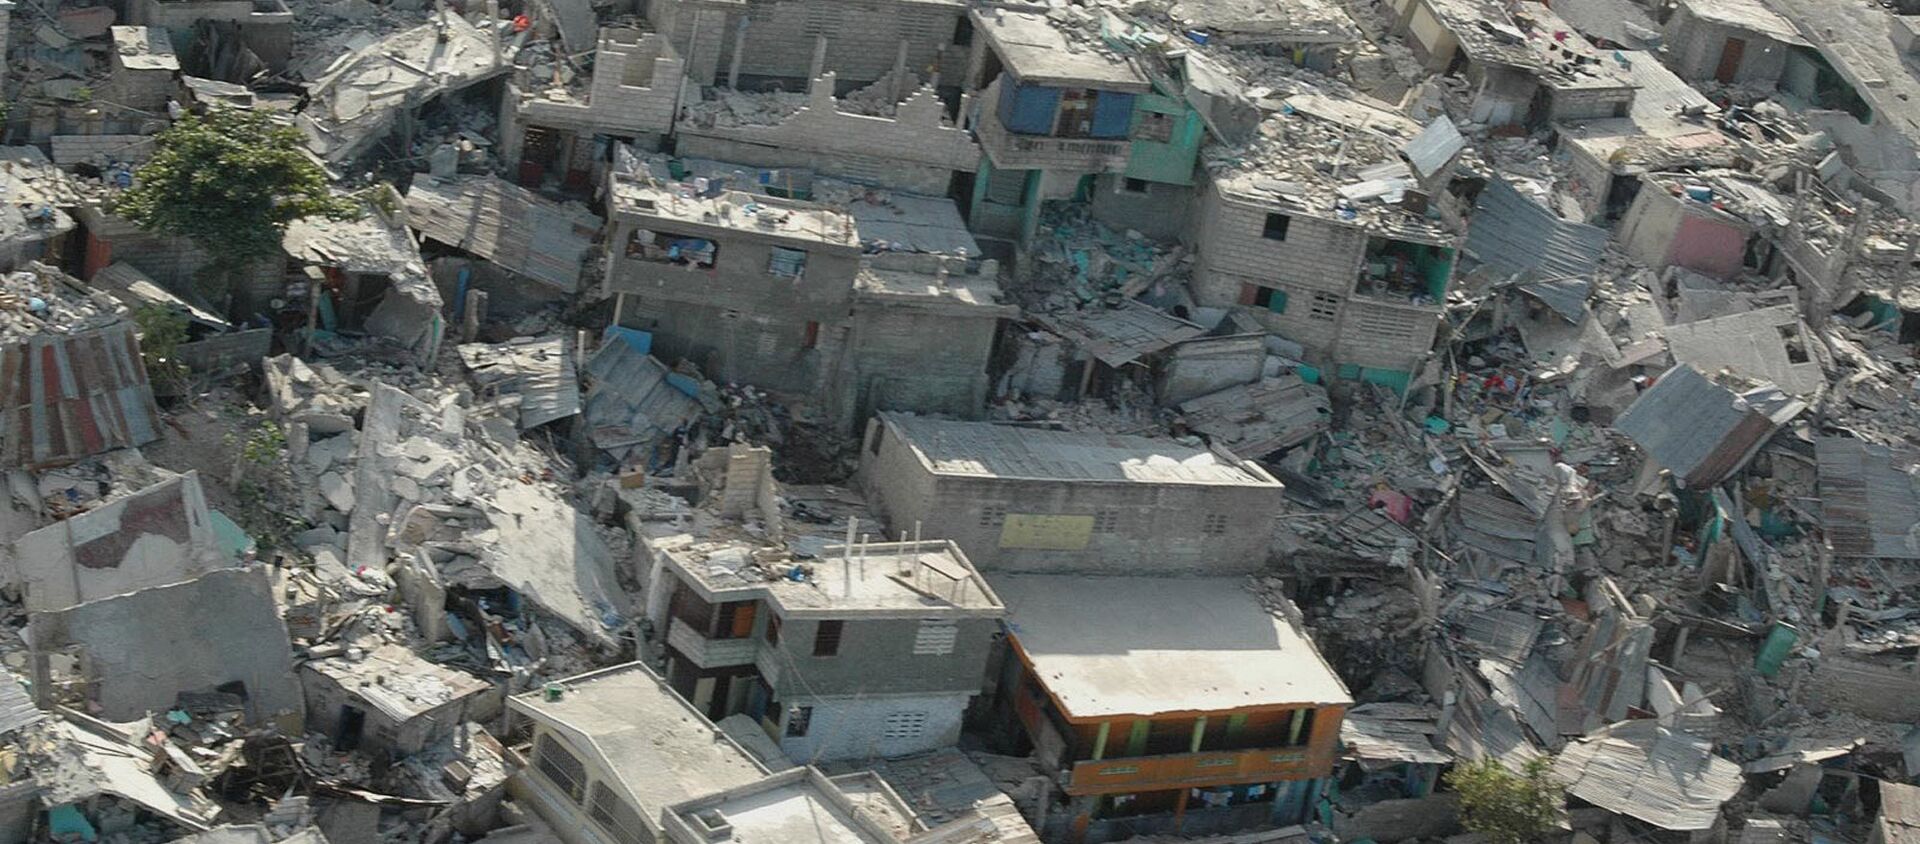 Collapsed buildings following earthquake, in Haiti’s capital Port-au-Prince. (File) - Sputnik International, 1920, 14.08.2021